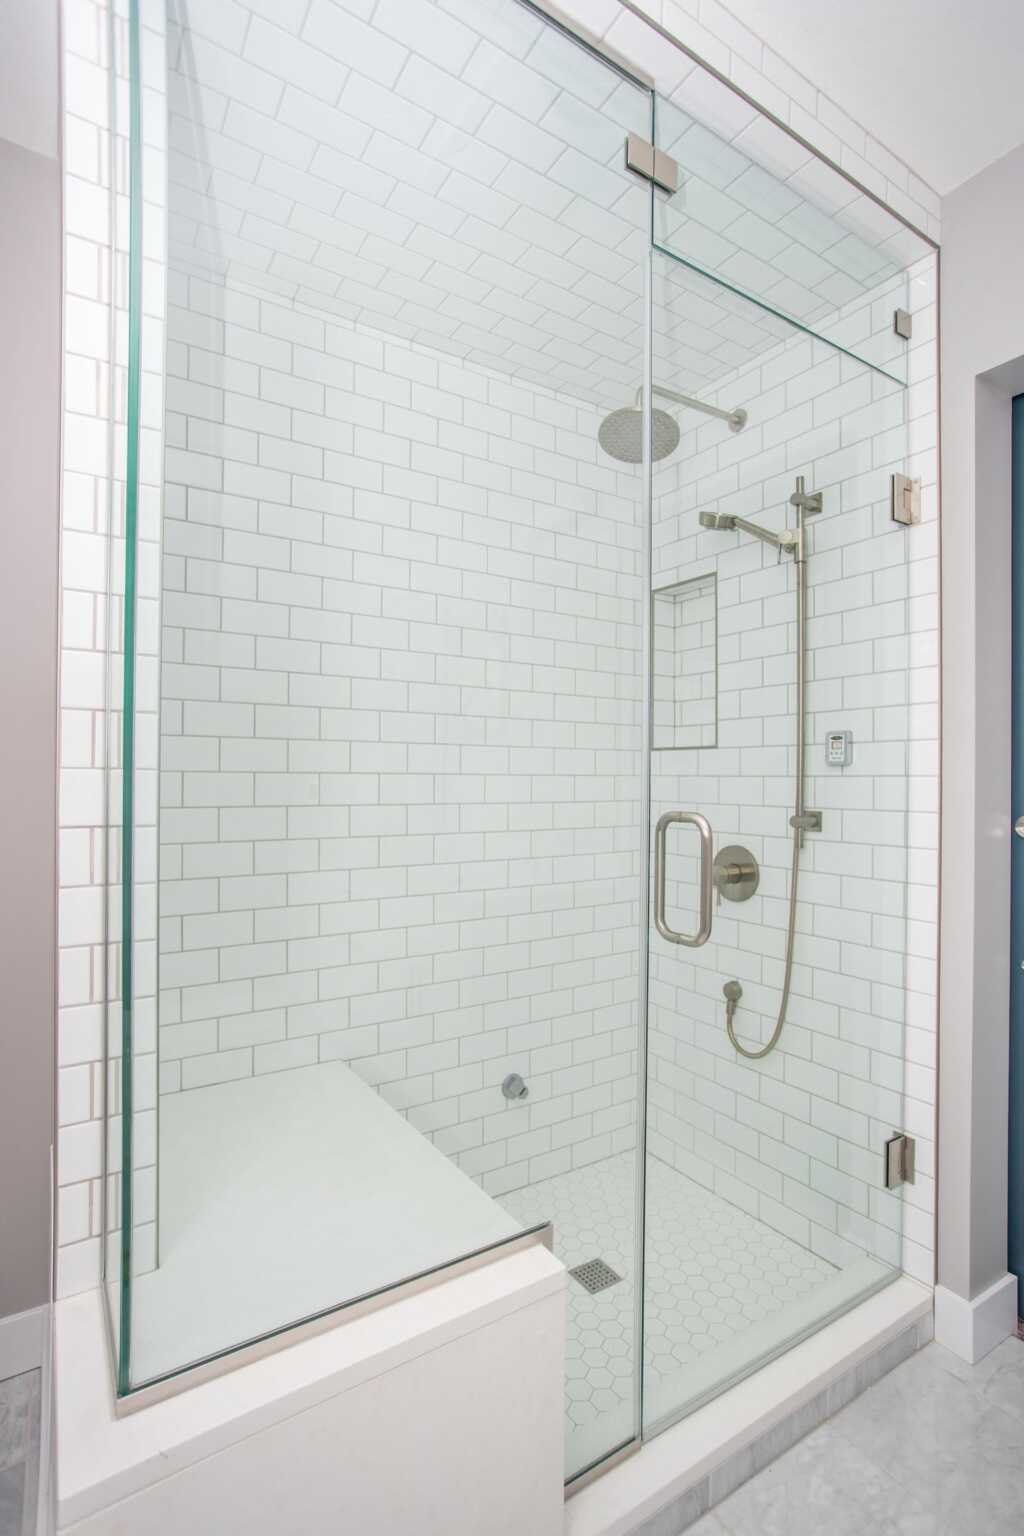 Belamour Homes - Emerald Park Kitchen and Bathroom Renovation - Walk-in Shower